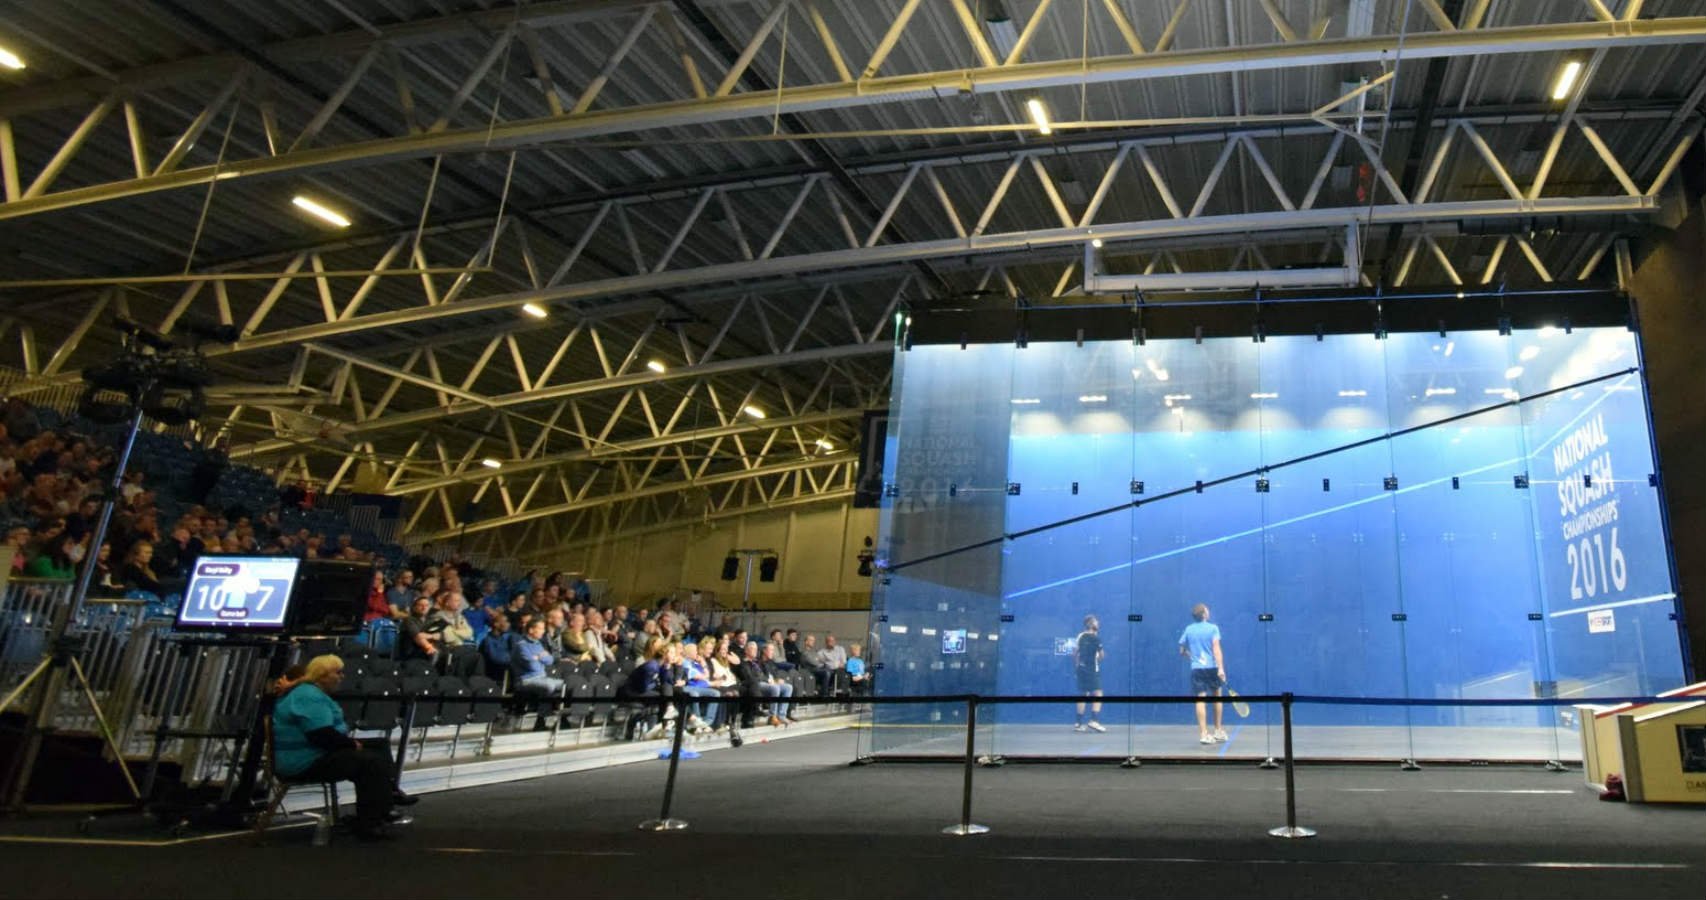 National Squash Championships